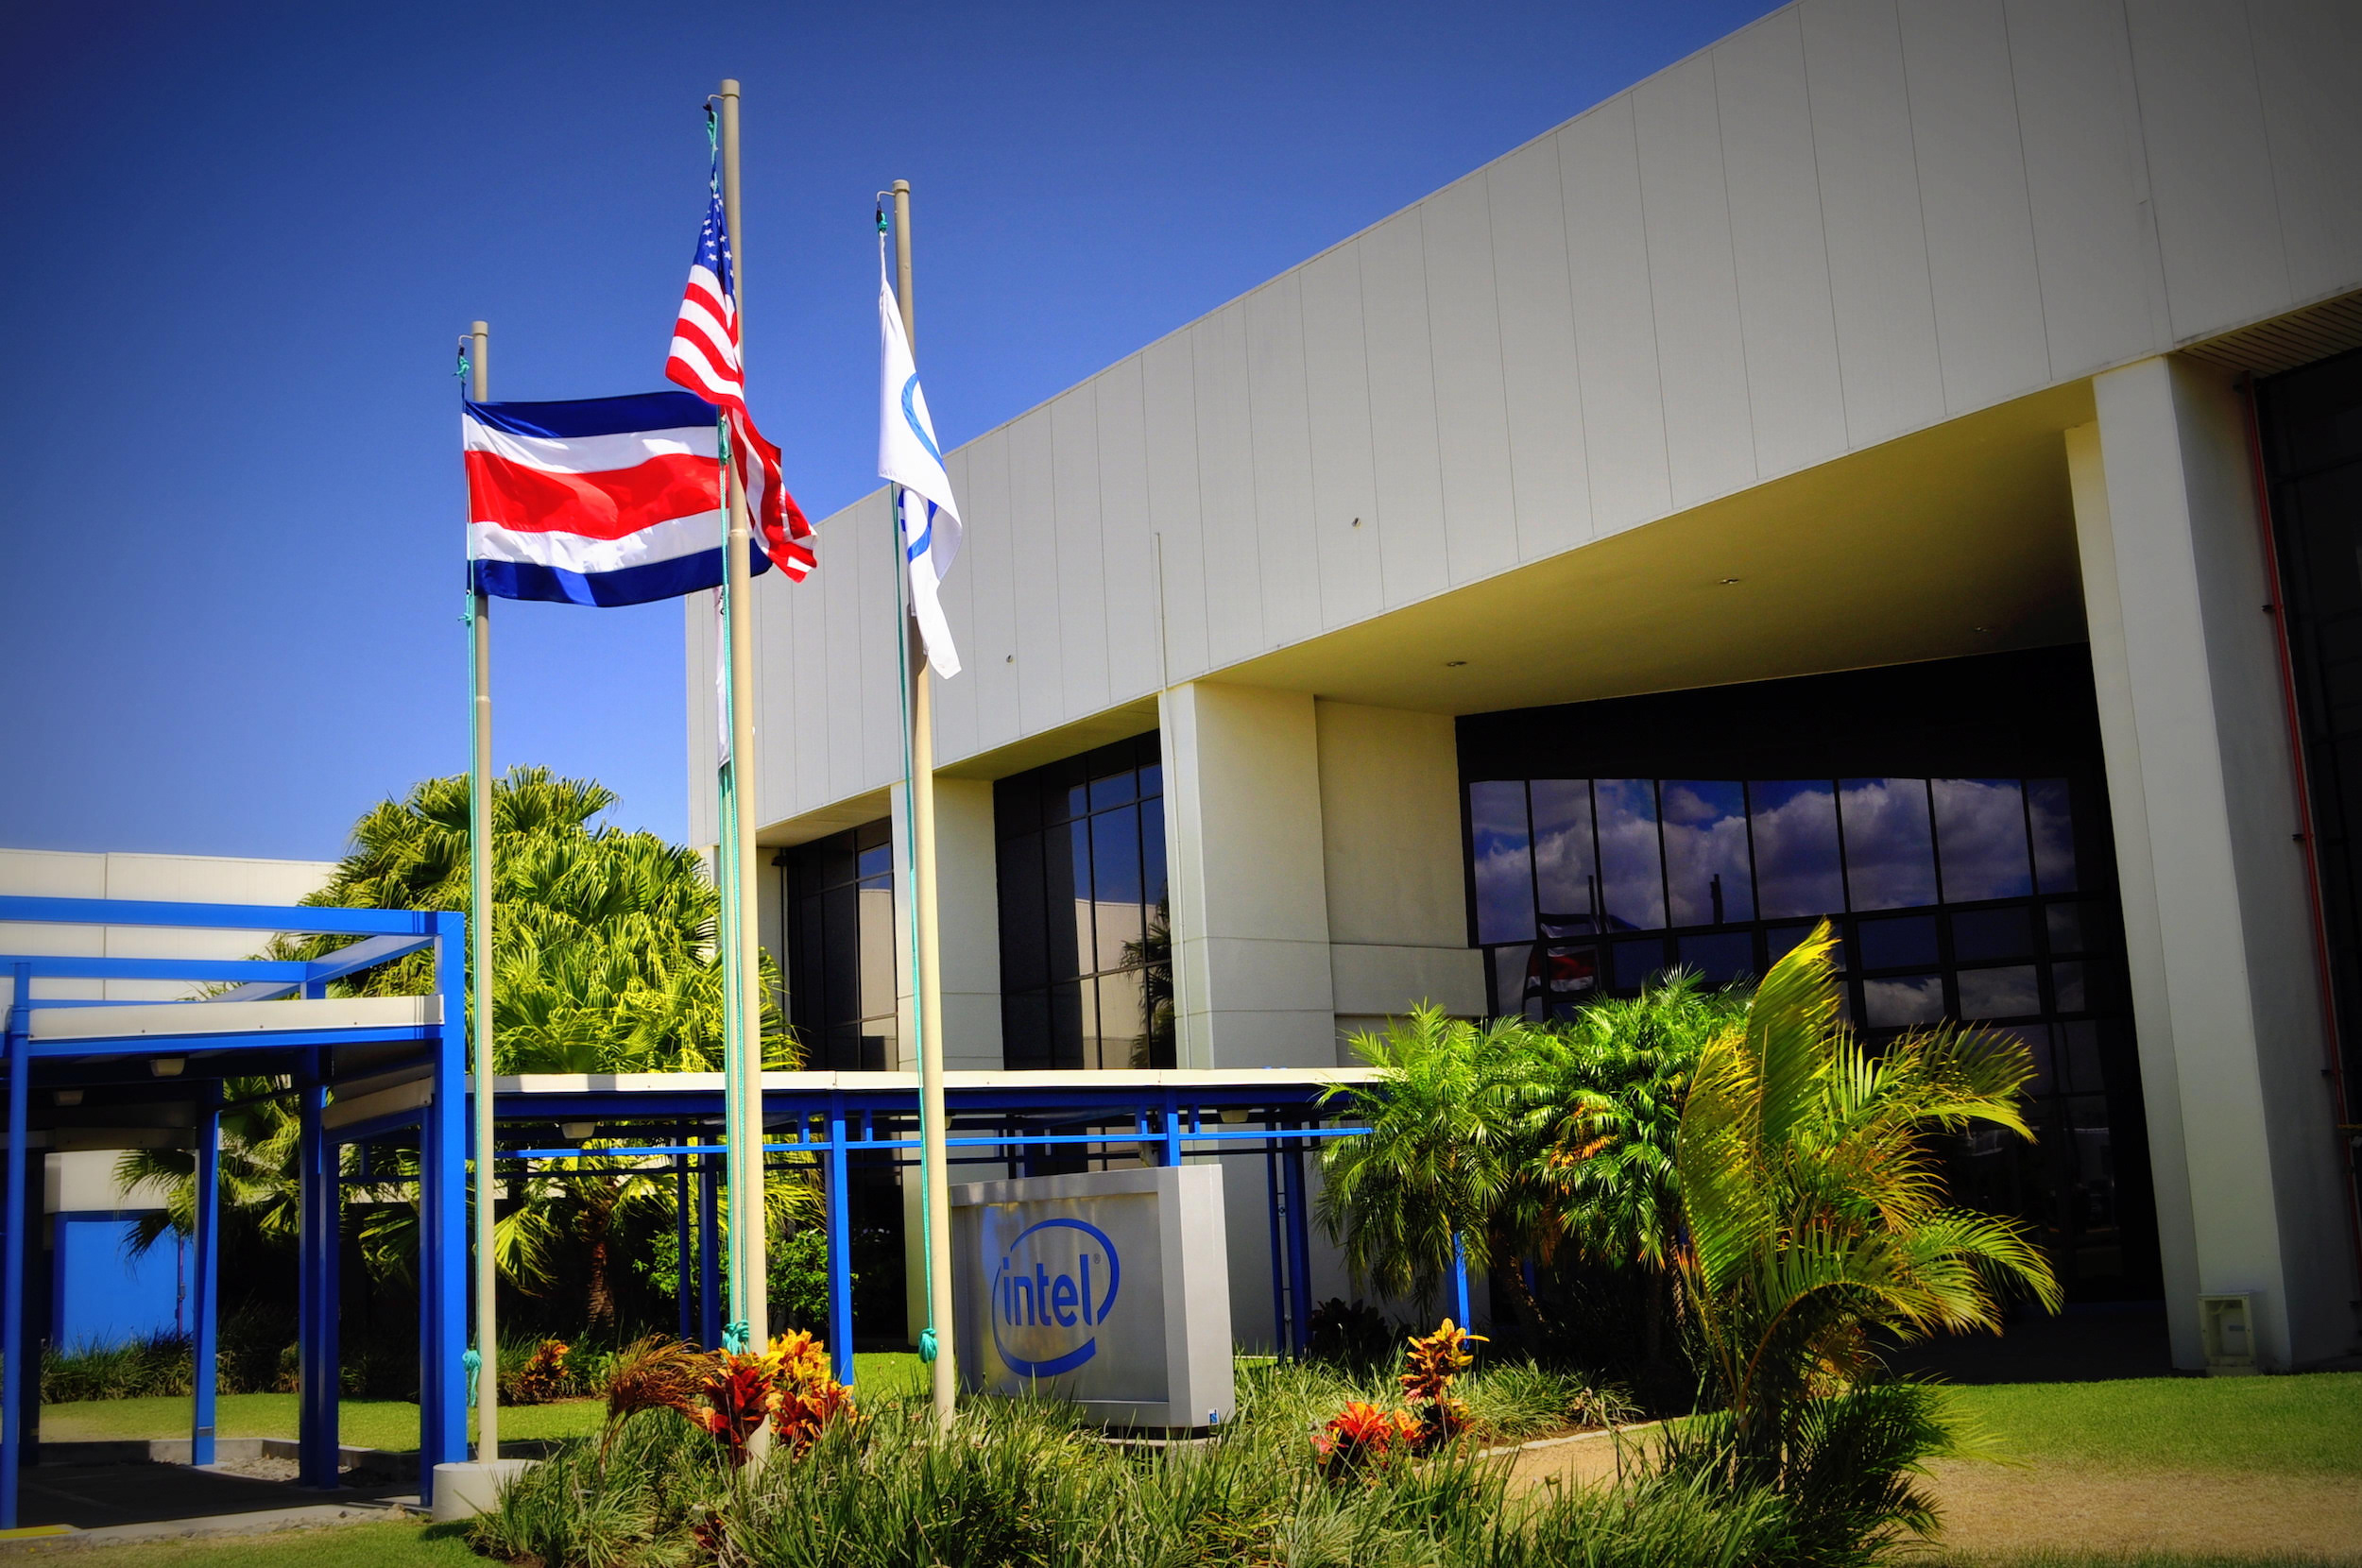 Intel costa rica. Коста Рика завод Интел. Гос здание Коста Рики. Фабрики Intel в Коста Рике. Завод Intel в Коста Рике.